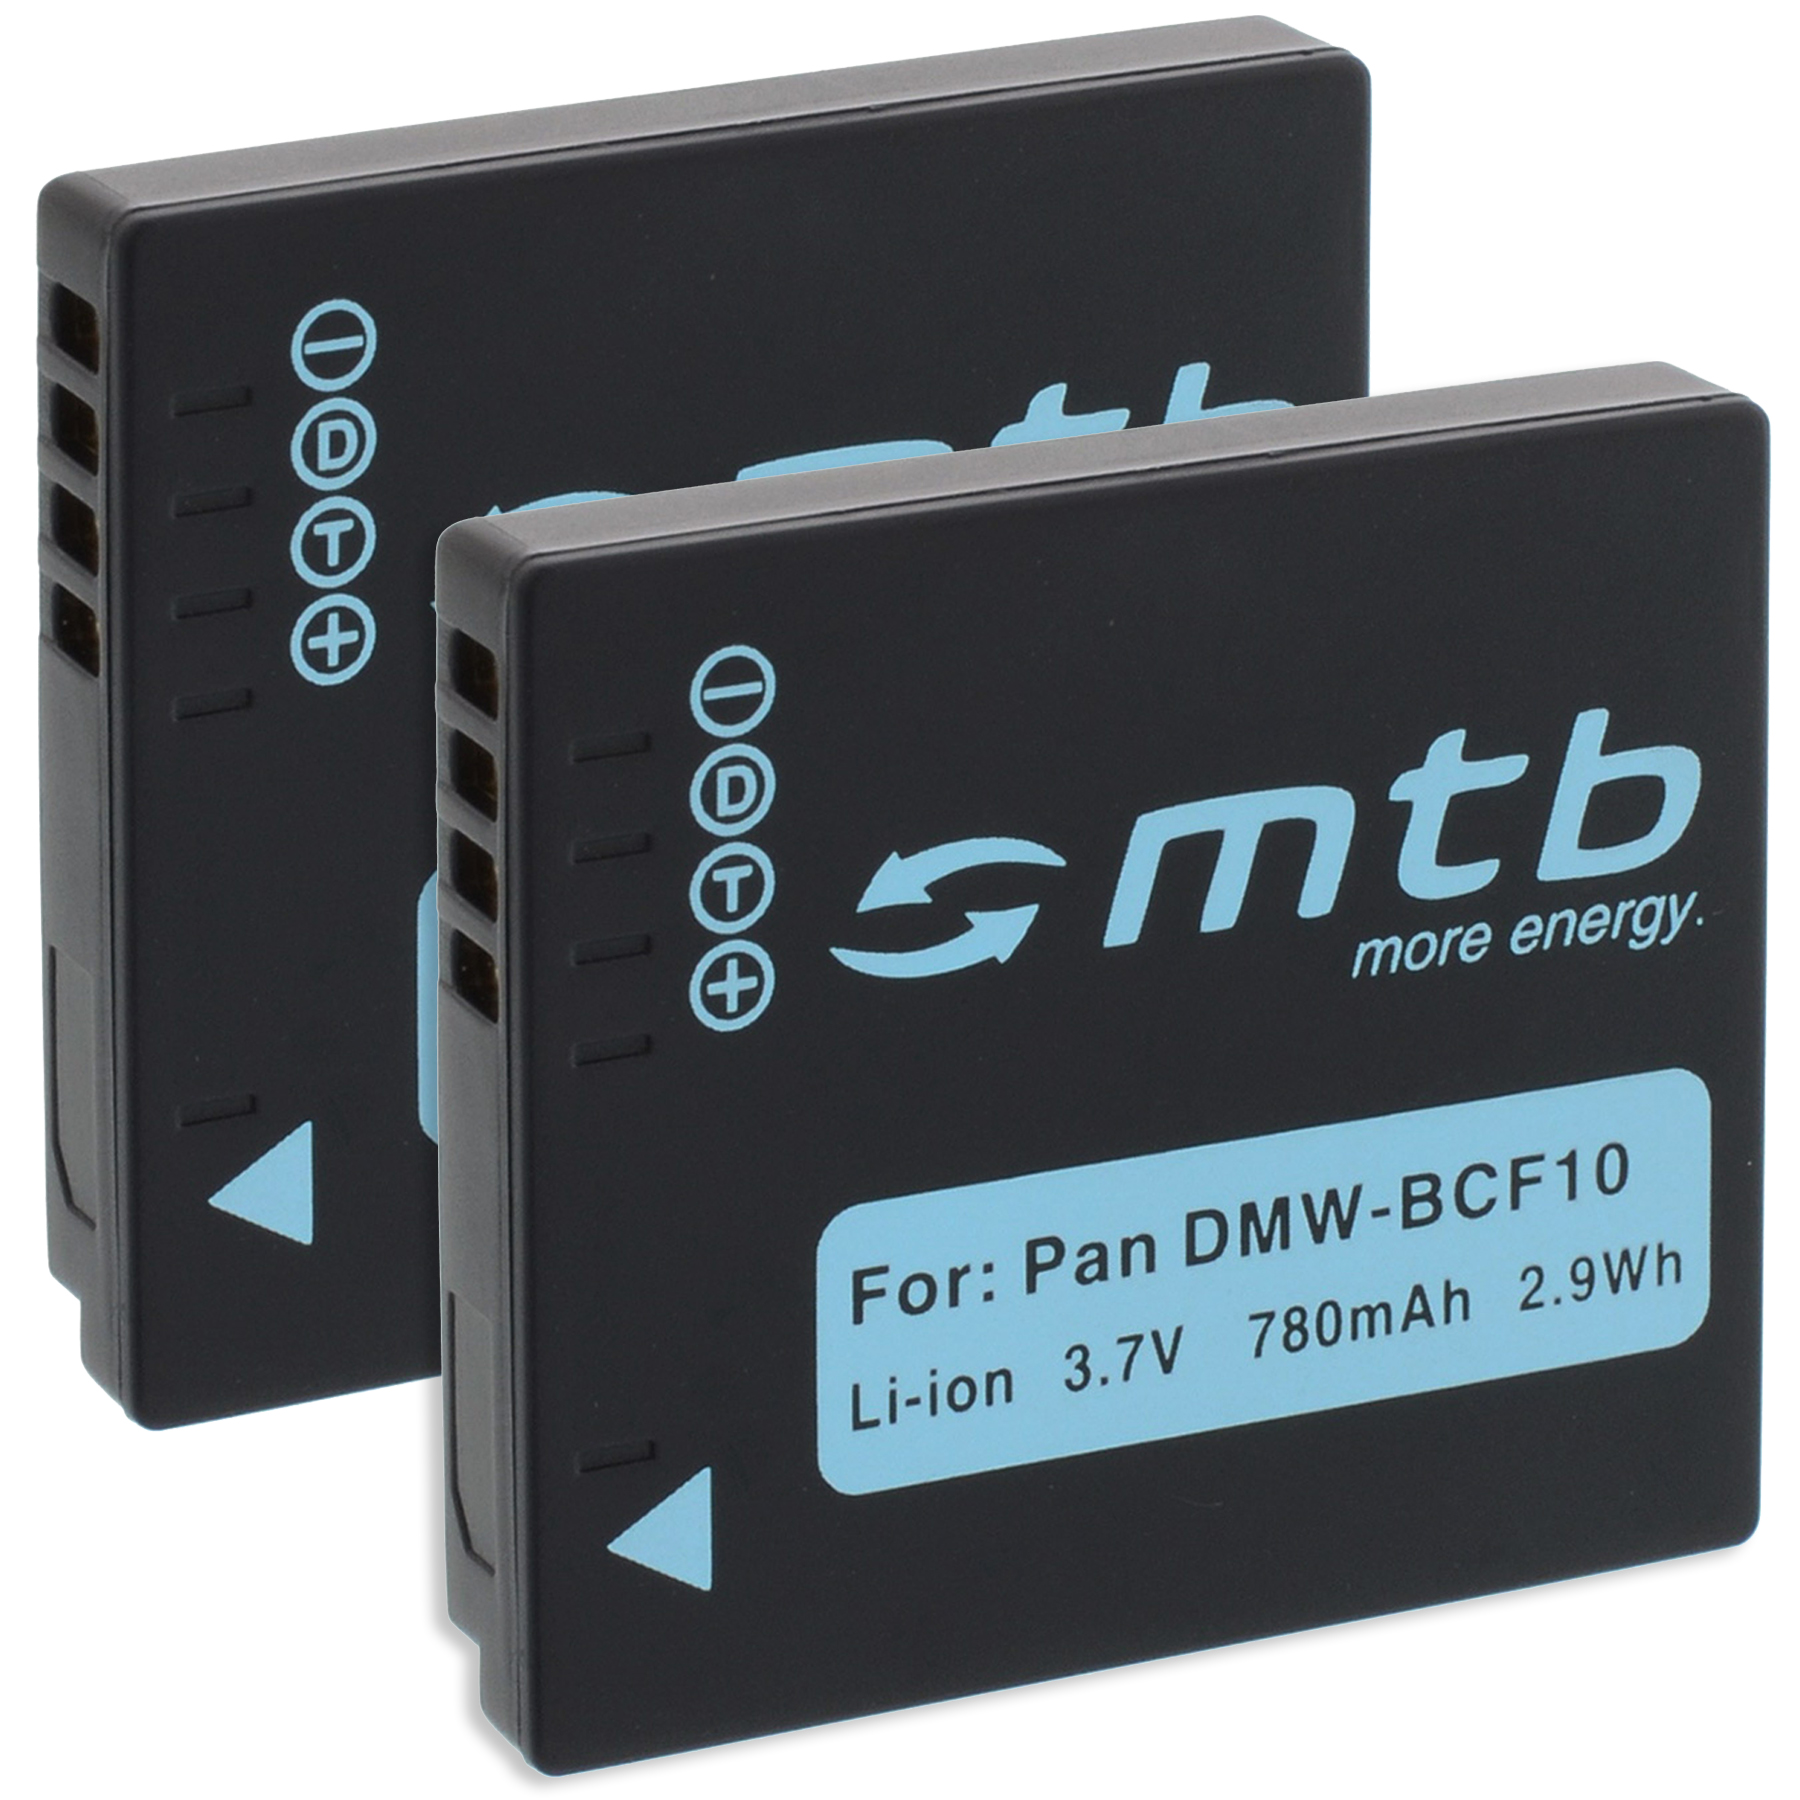 MTB MORE DMW-BCF10E 780 ENERGY BAT-156 Li-Ion, Akku, mAh 2x